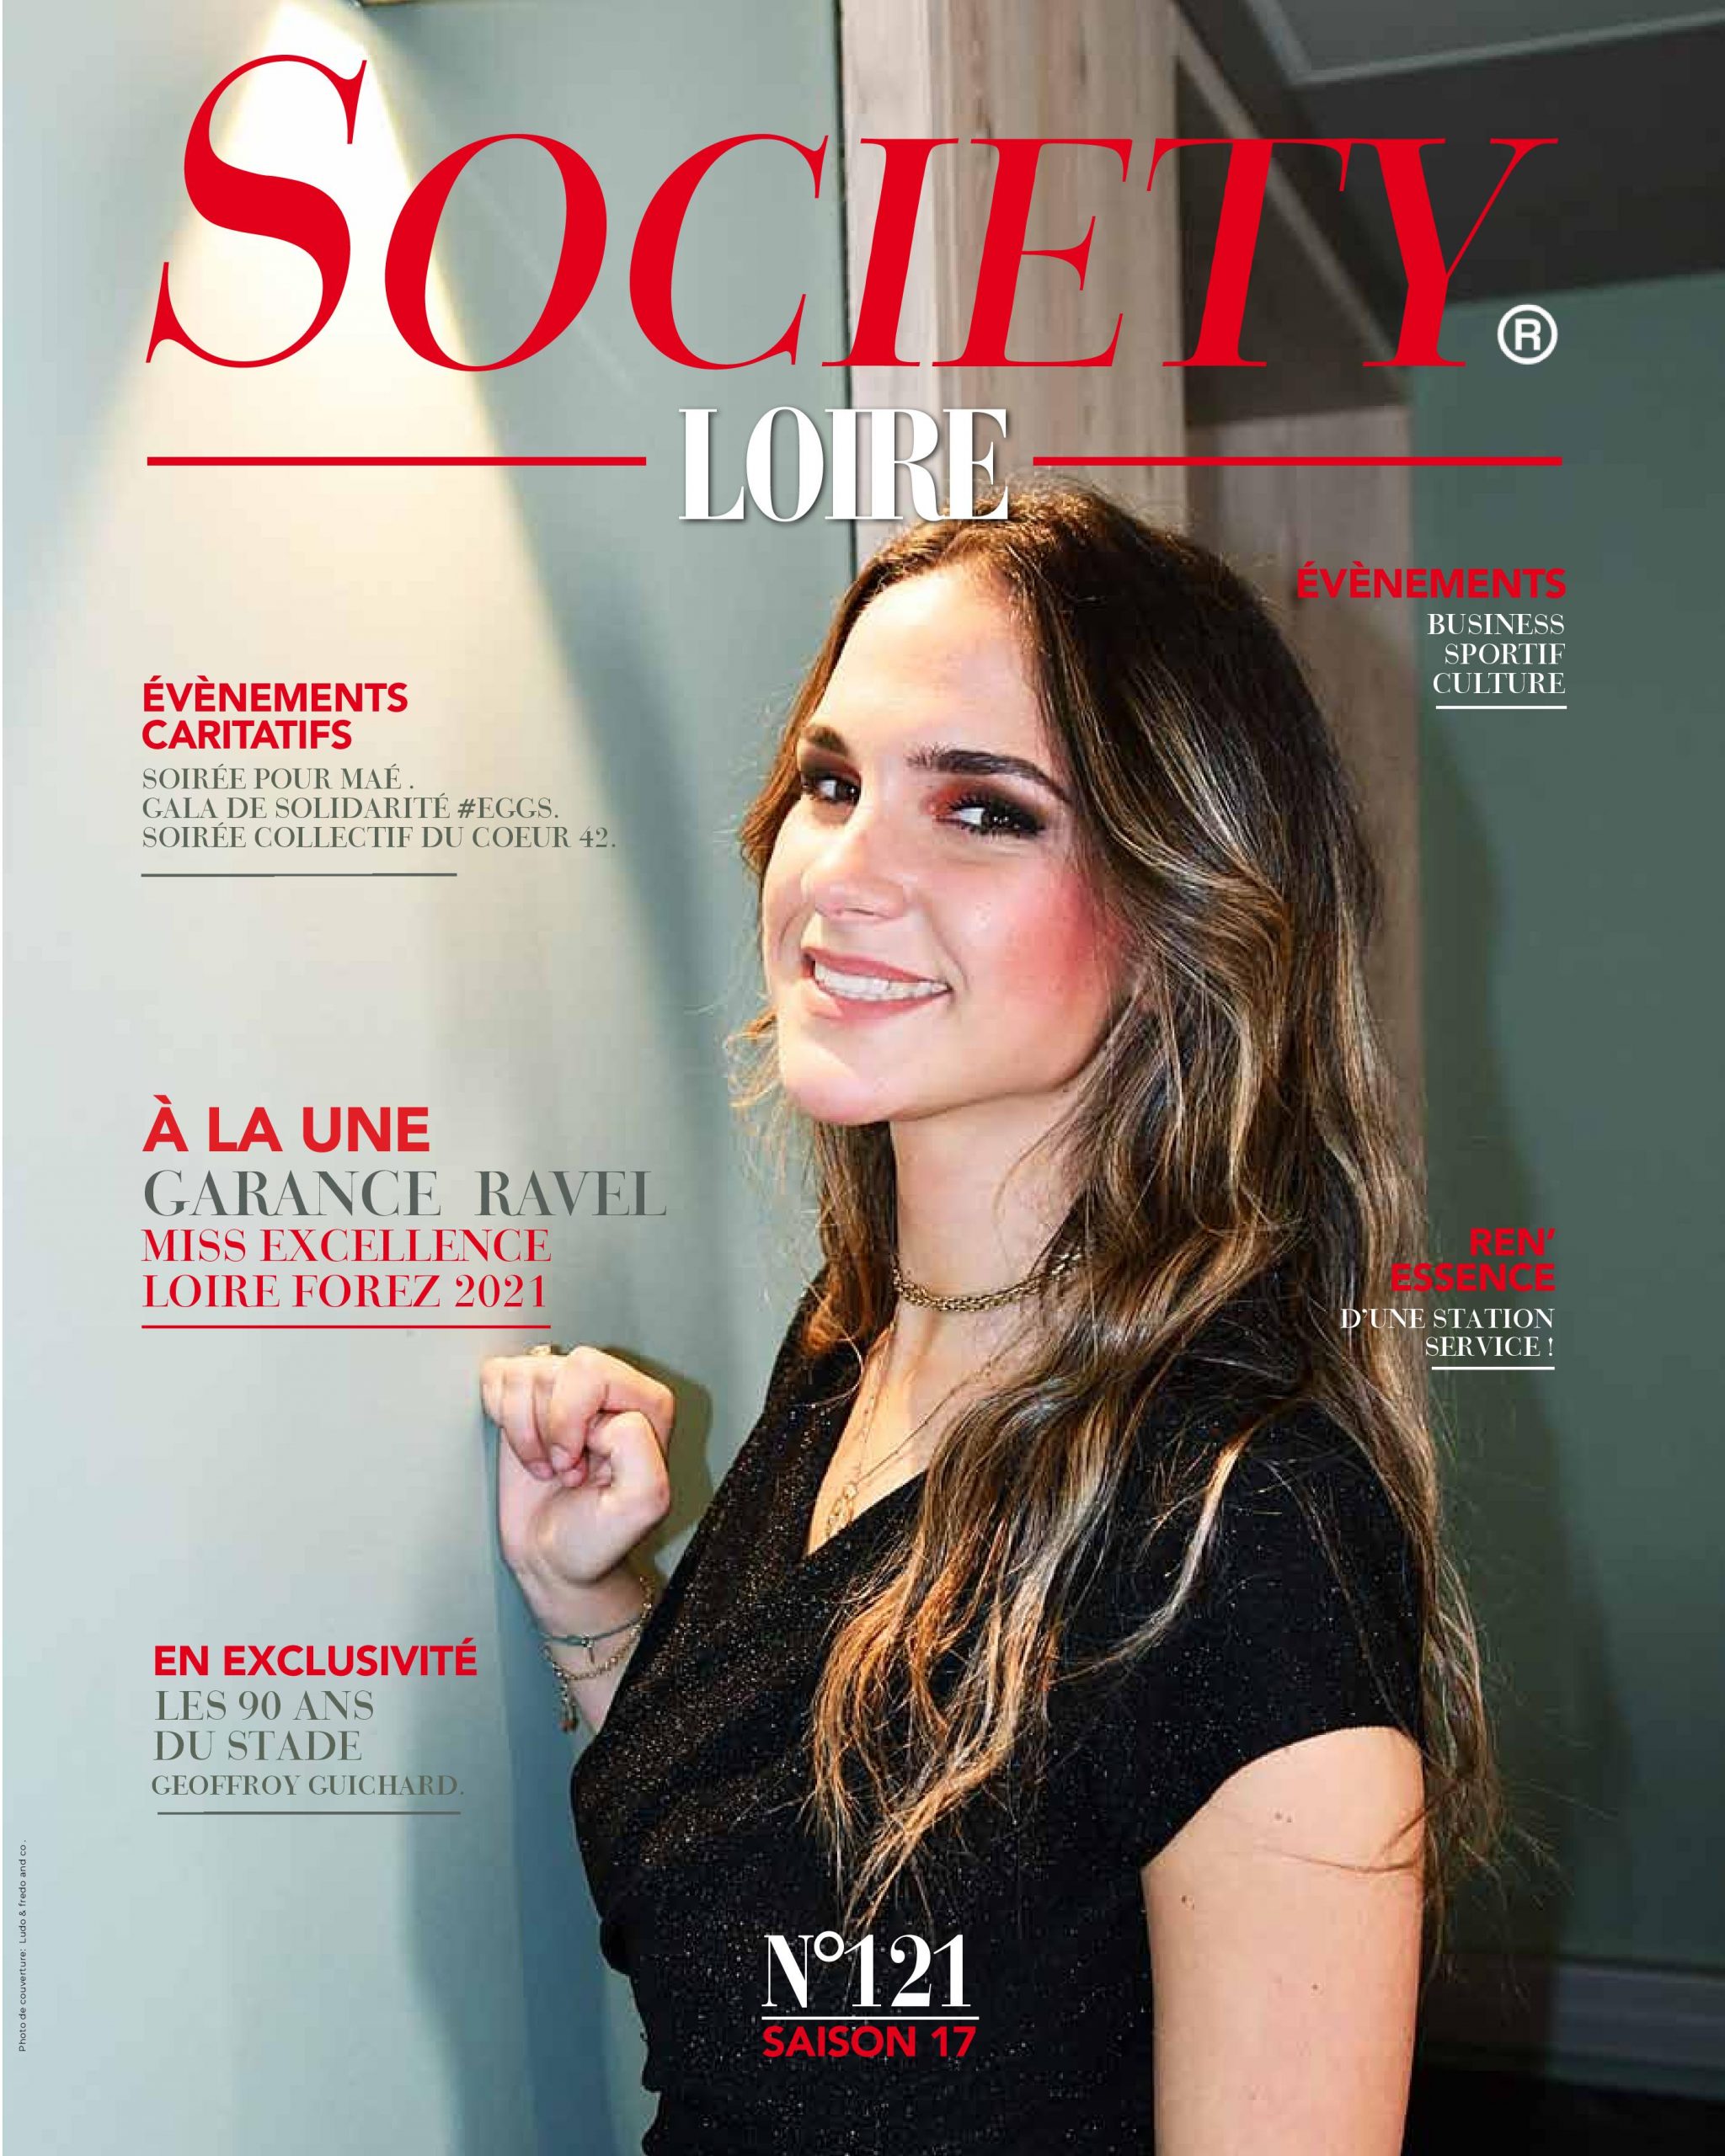 Magazine Society Loire N°121